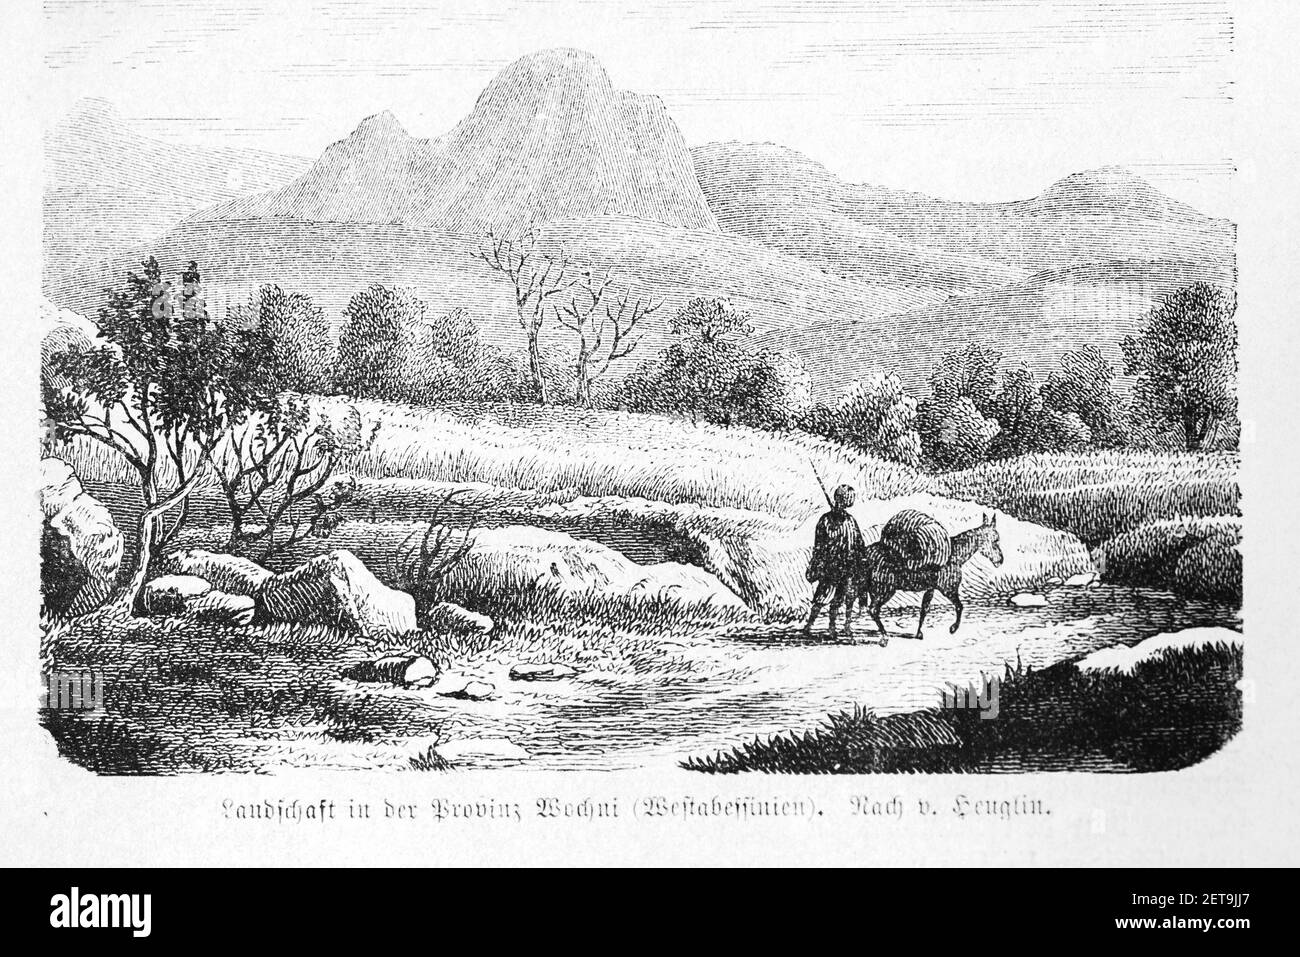 Paisaje en una provincia occidental, Abyssina, Etiopía, África Oriental, Dr. Richard Andree, Abessinien, Land und Volk, Leipzig 1869 Foto de stock